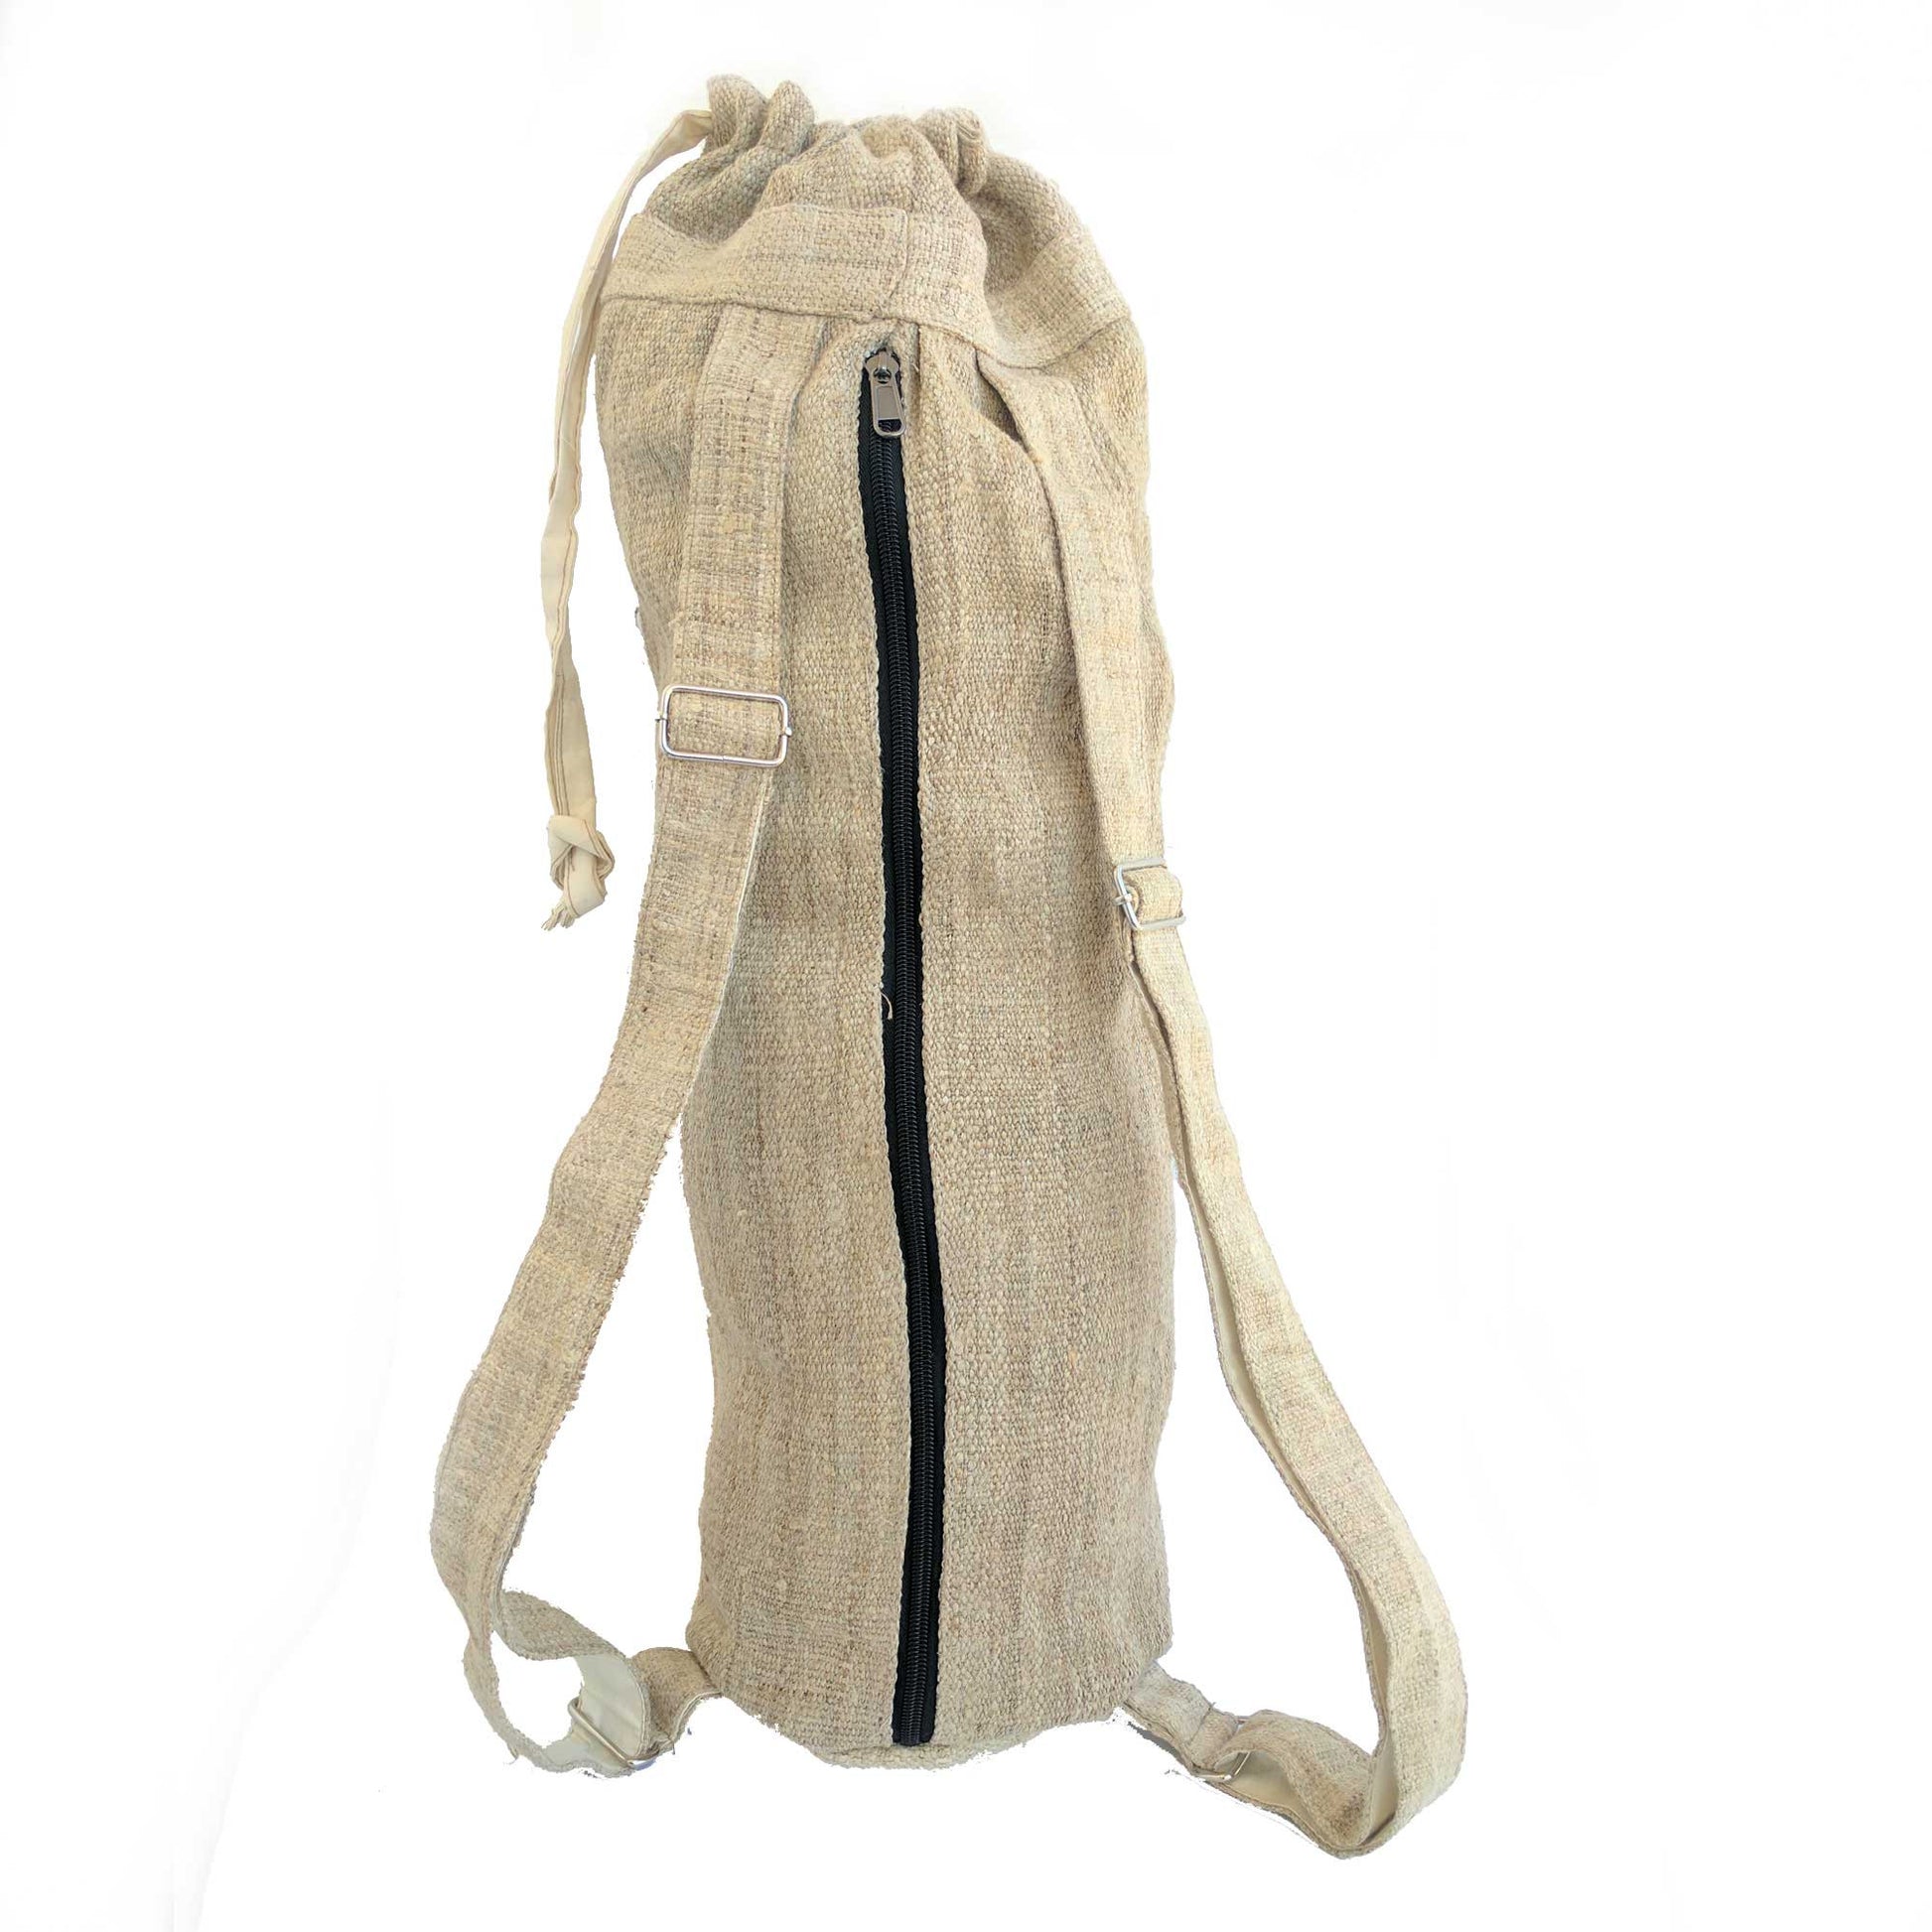 Yoga Mat Bag made from 100% pure hand woven hemp rear view